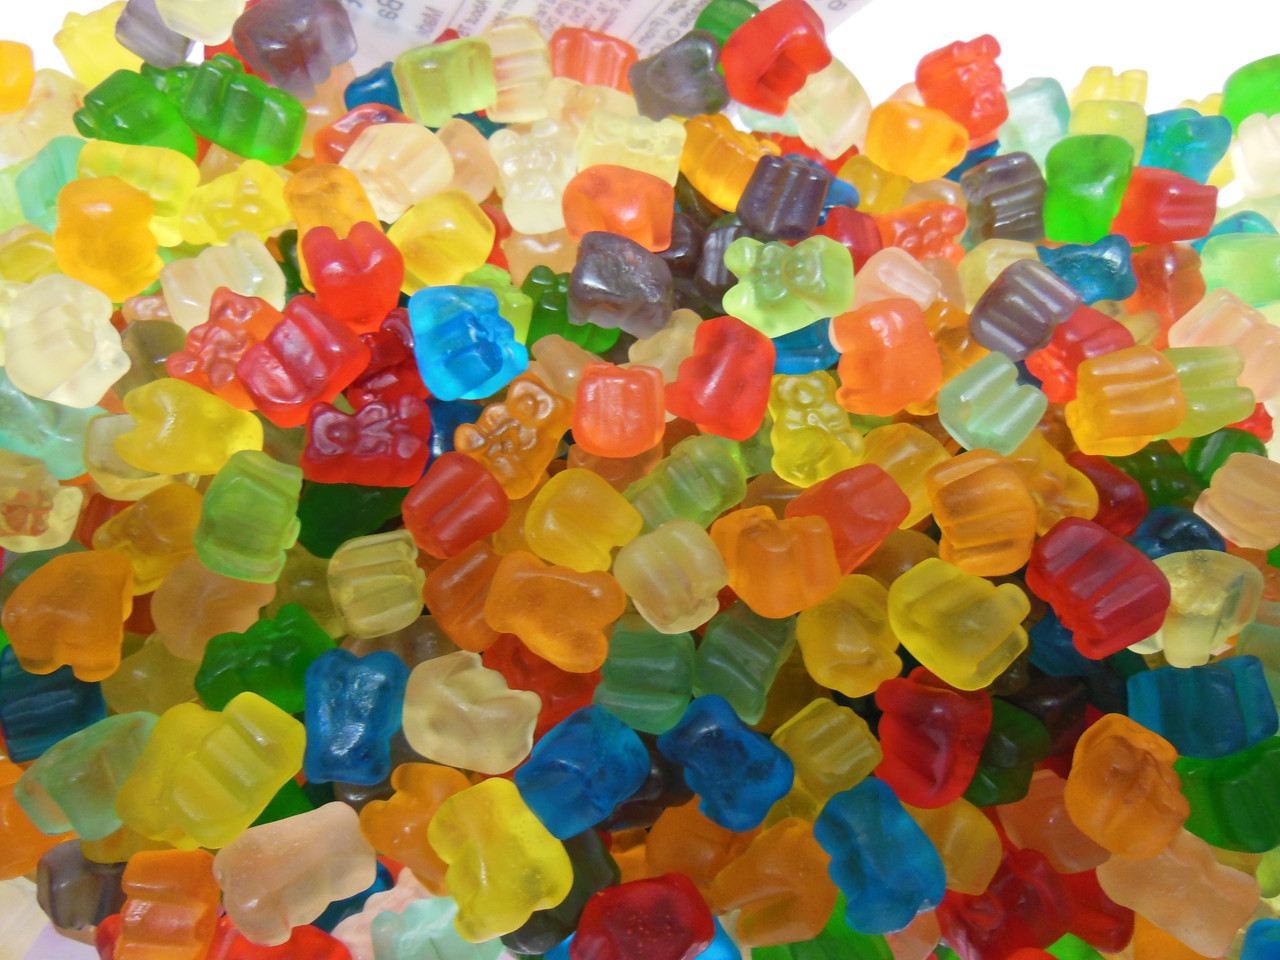 12 flavored Gummy Bears (bulk) 1 lb